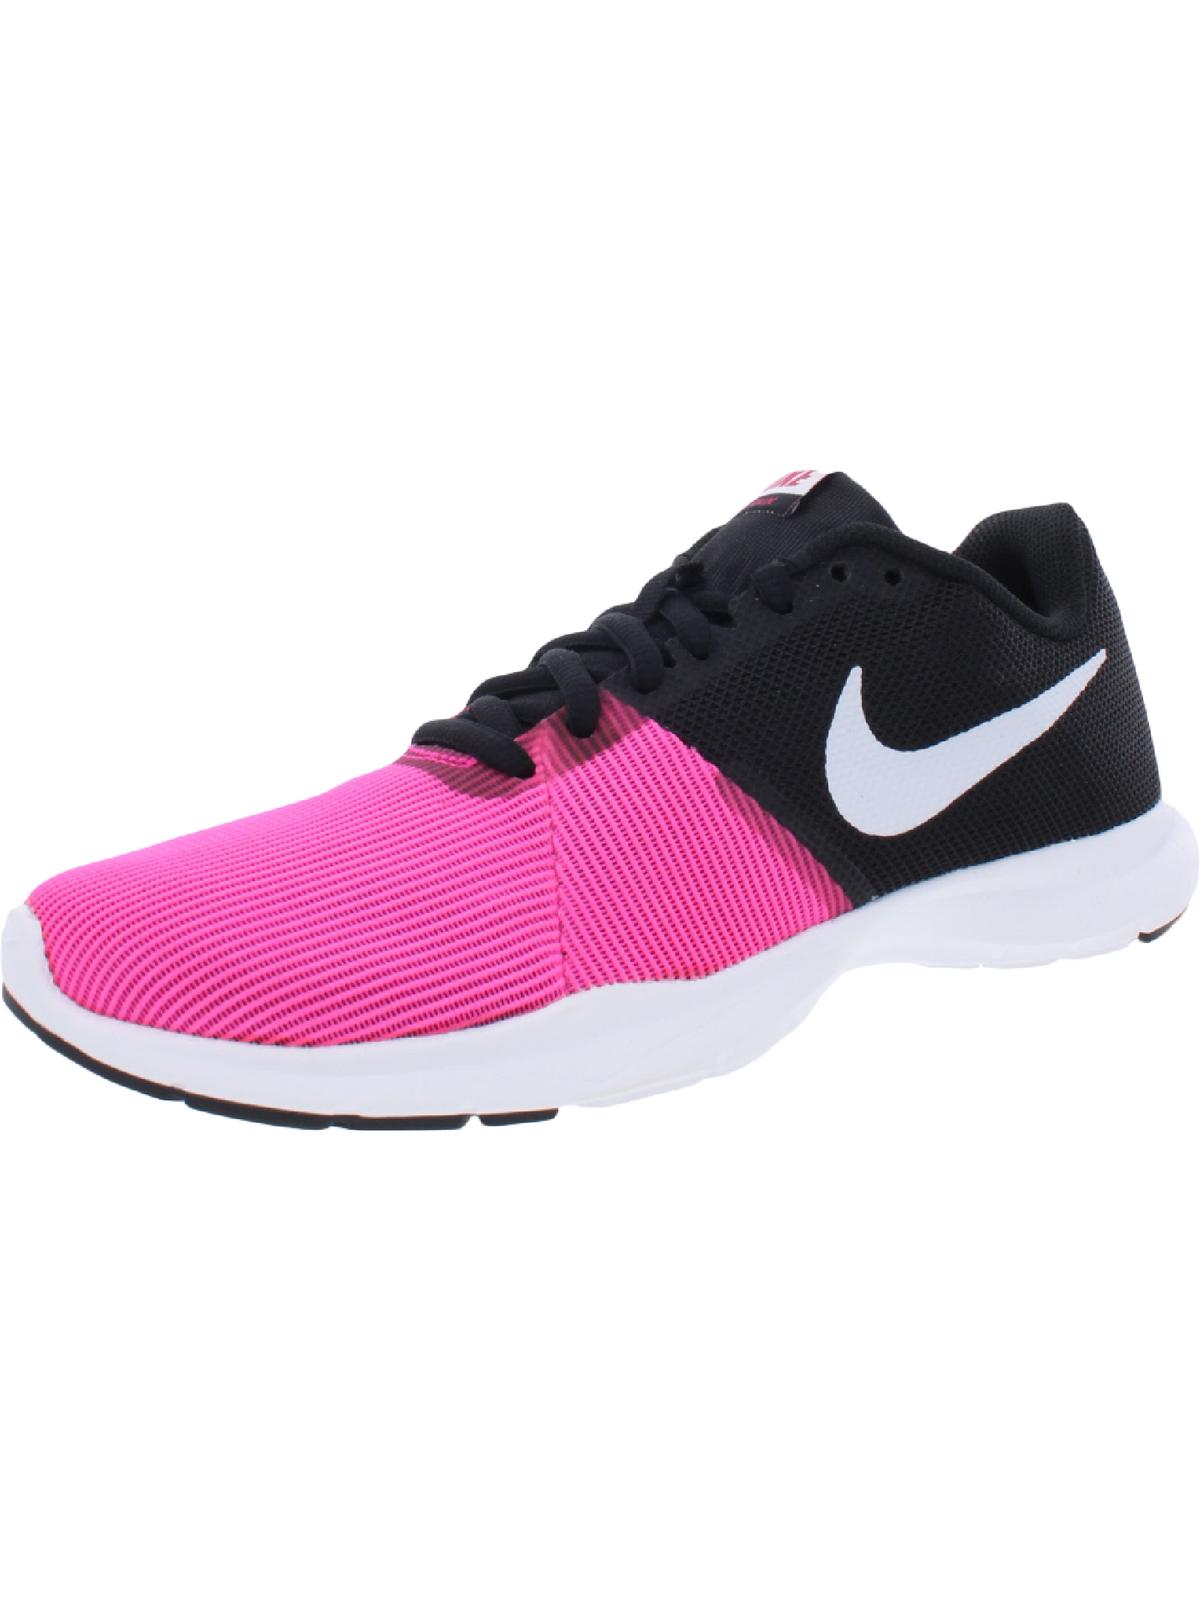 científico virtud Operación posible Buy Nike Girls Flex Bijoux Big Kid Lifestyle Athletic and Training Shoes  Black Online at Lowest Price in Ubuy Nepal. 850071897